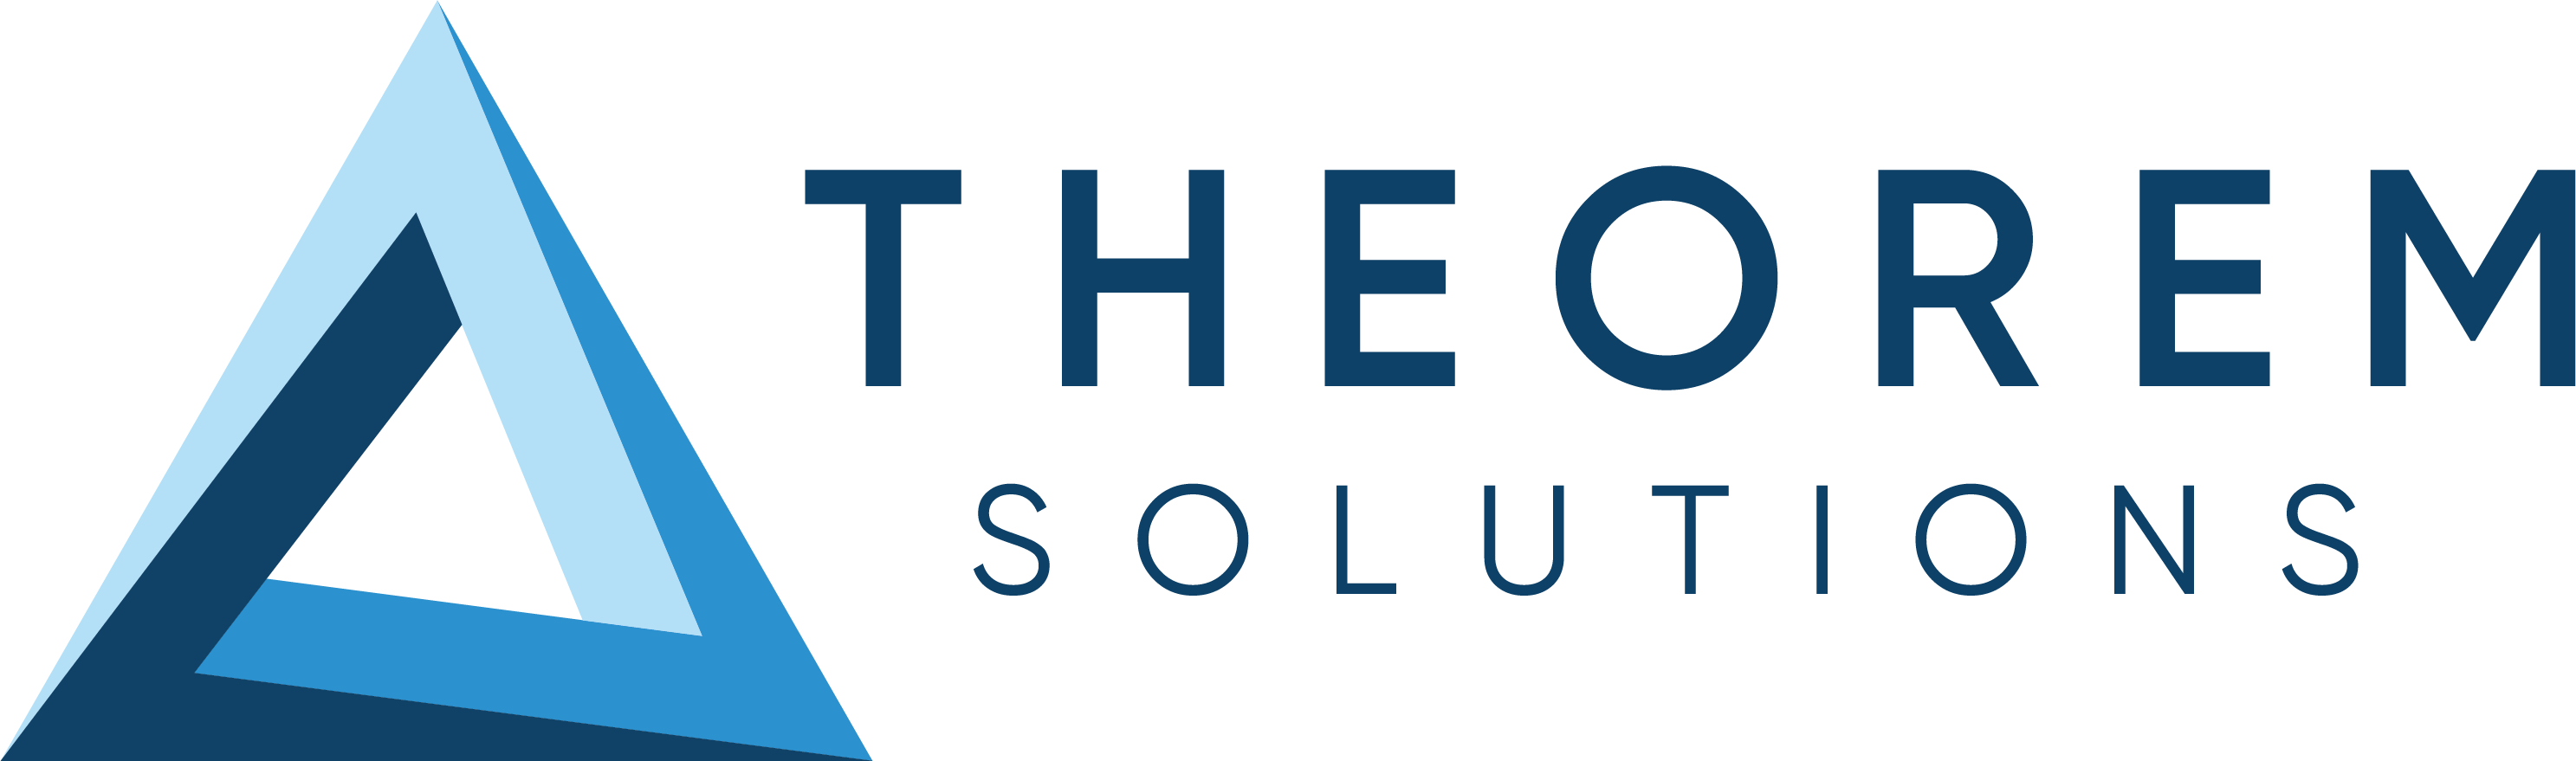 Theorem Solutions logo